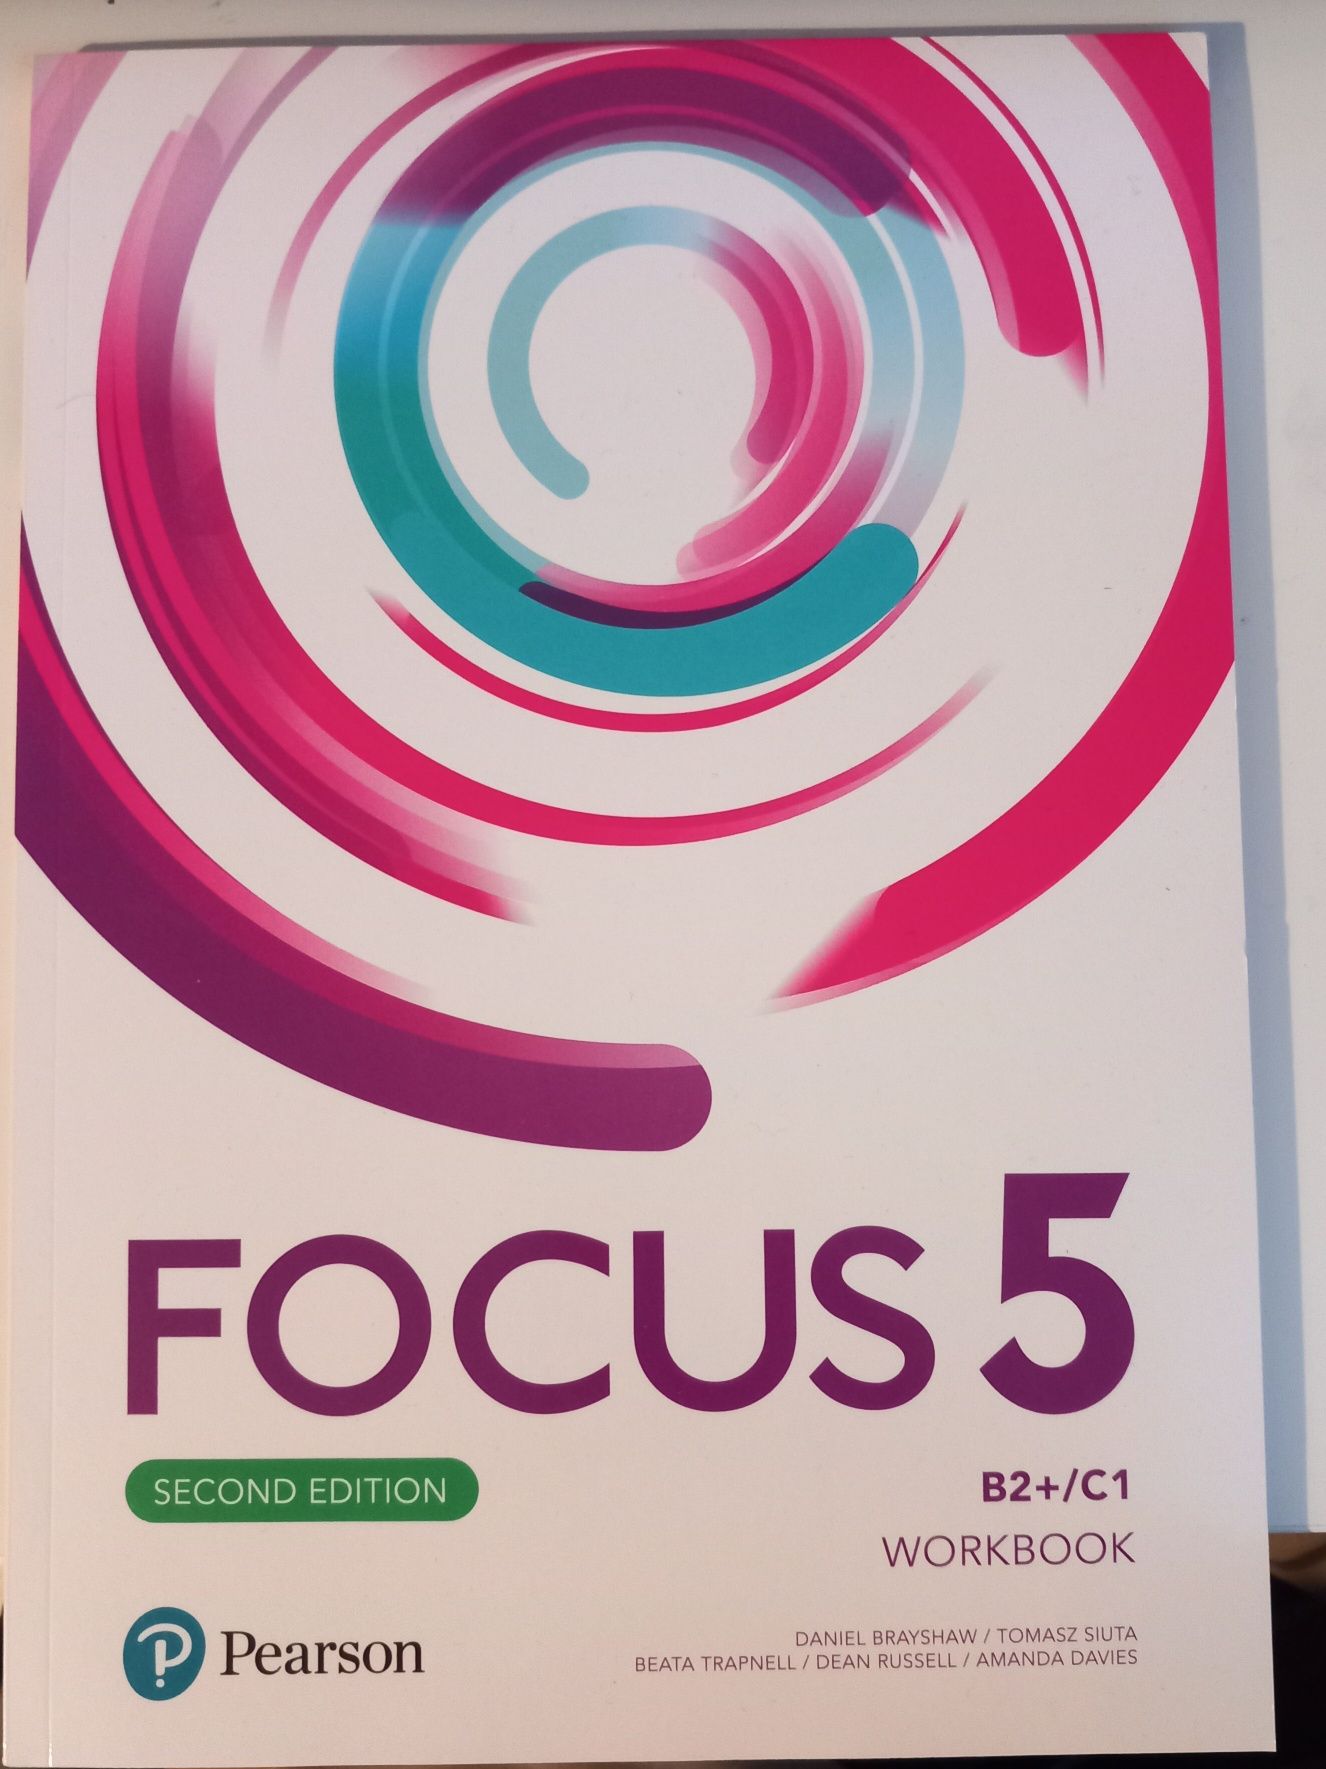 Focus 5 second edition Pearson B2+/C1 workbook ćwiczenia angielski